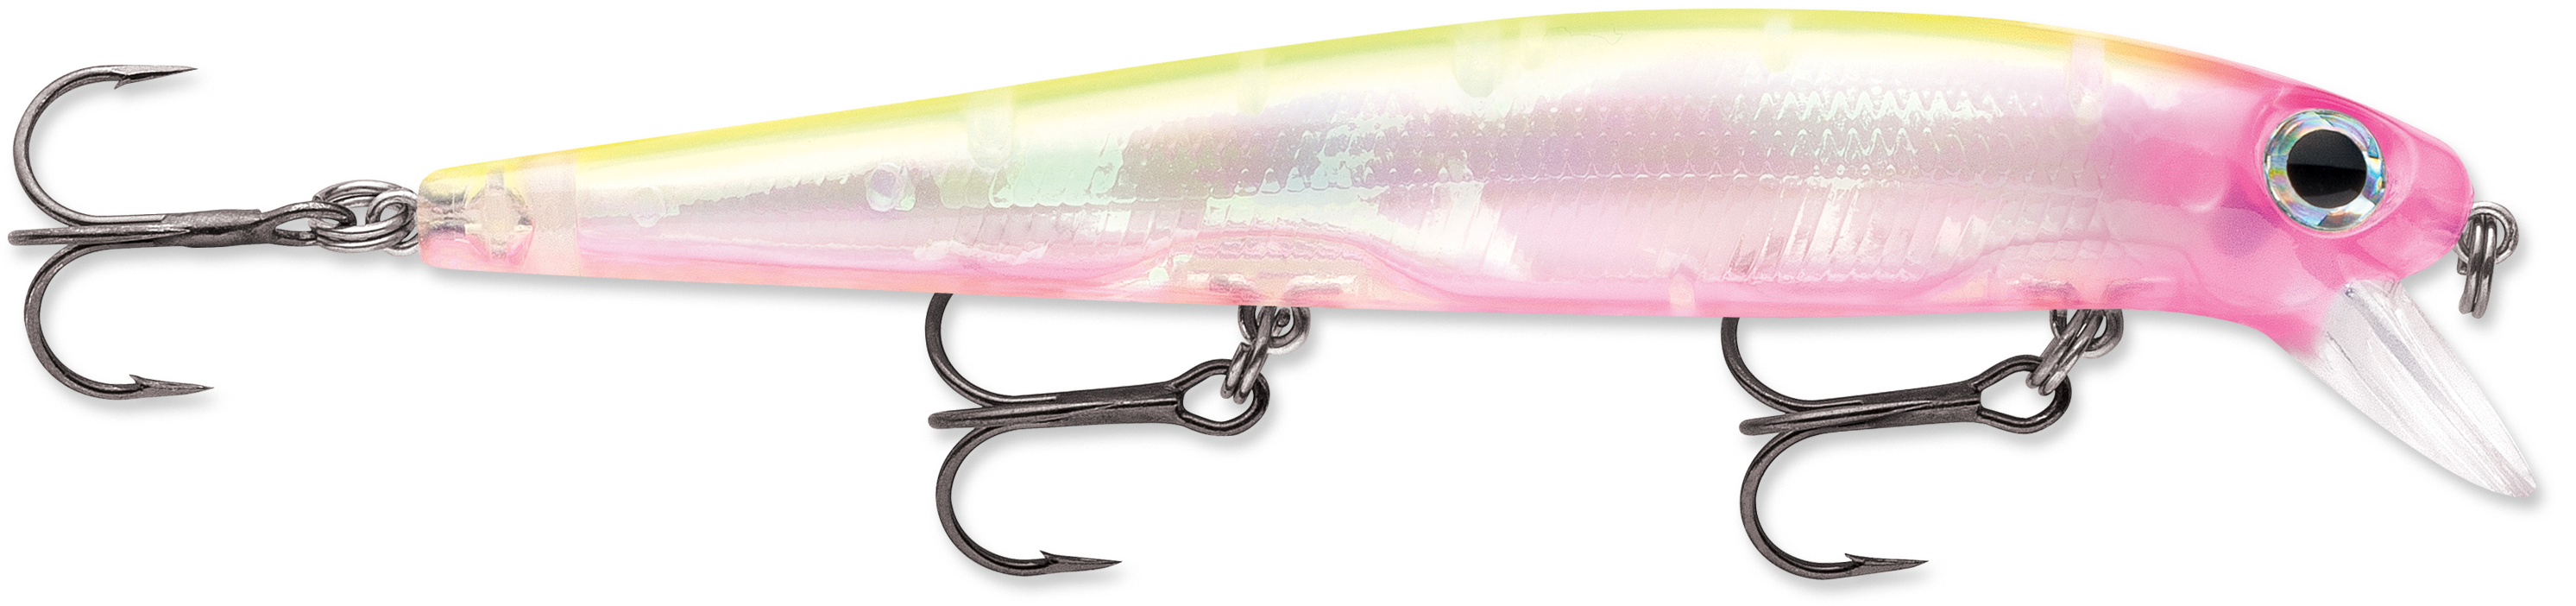 Storm ThunderStick MadFlash - Ghost Pink Lemonade UV - Precision Fishing